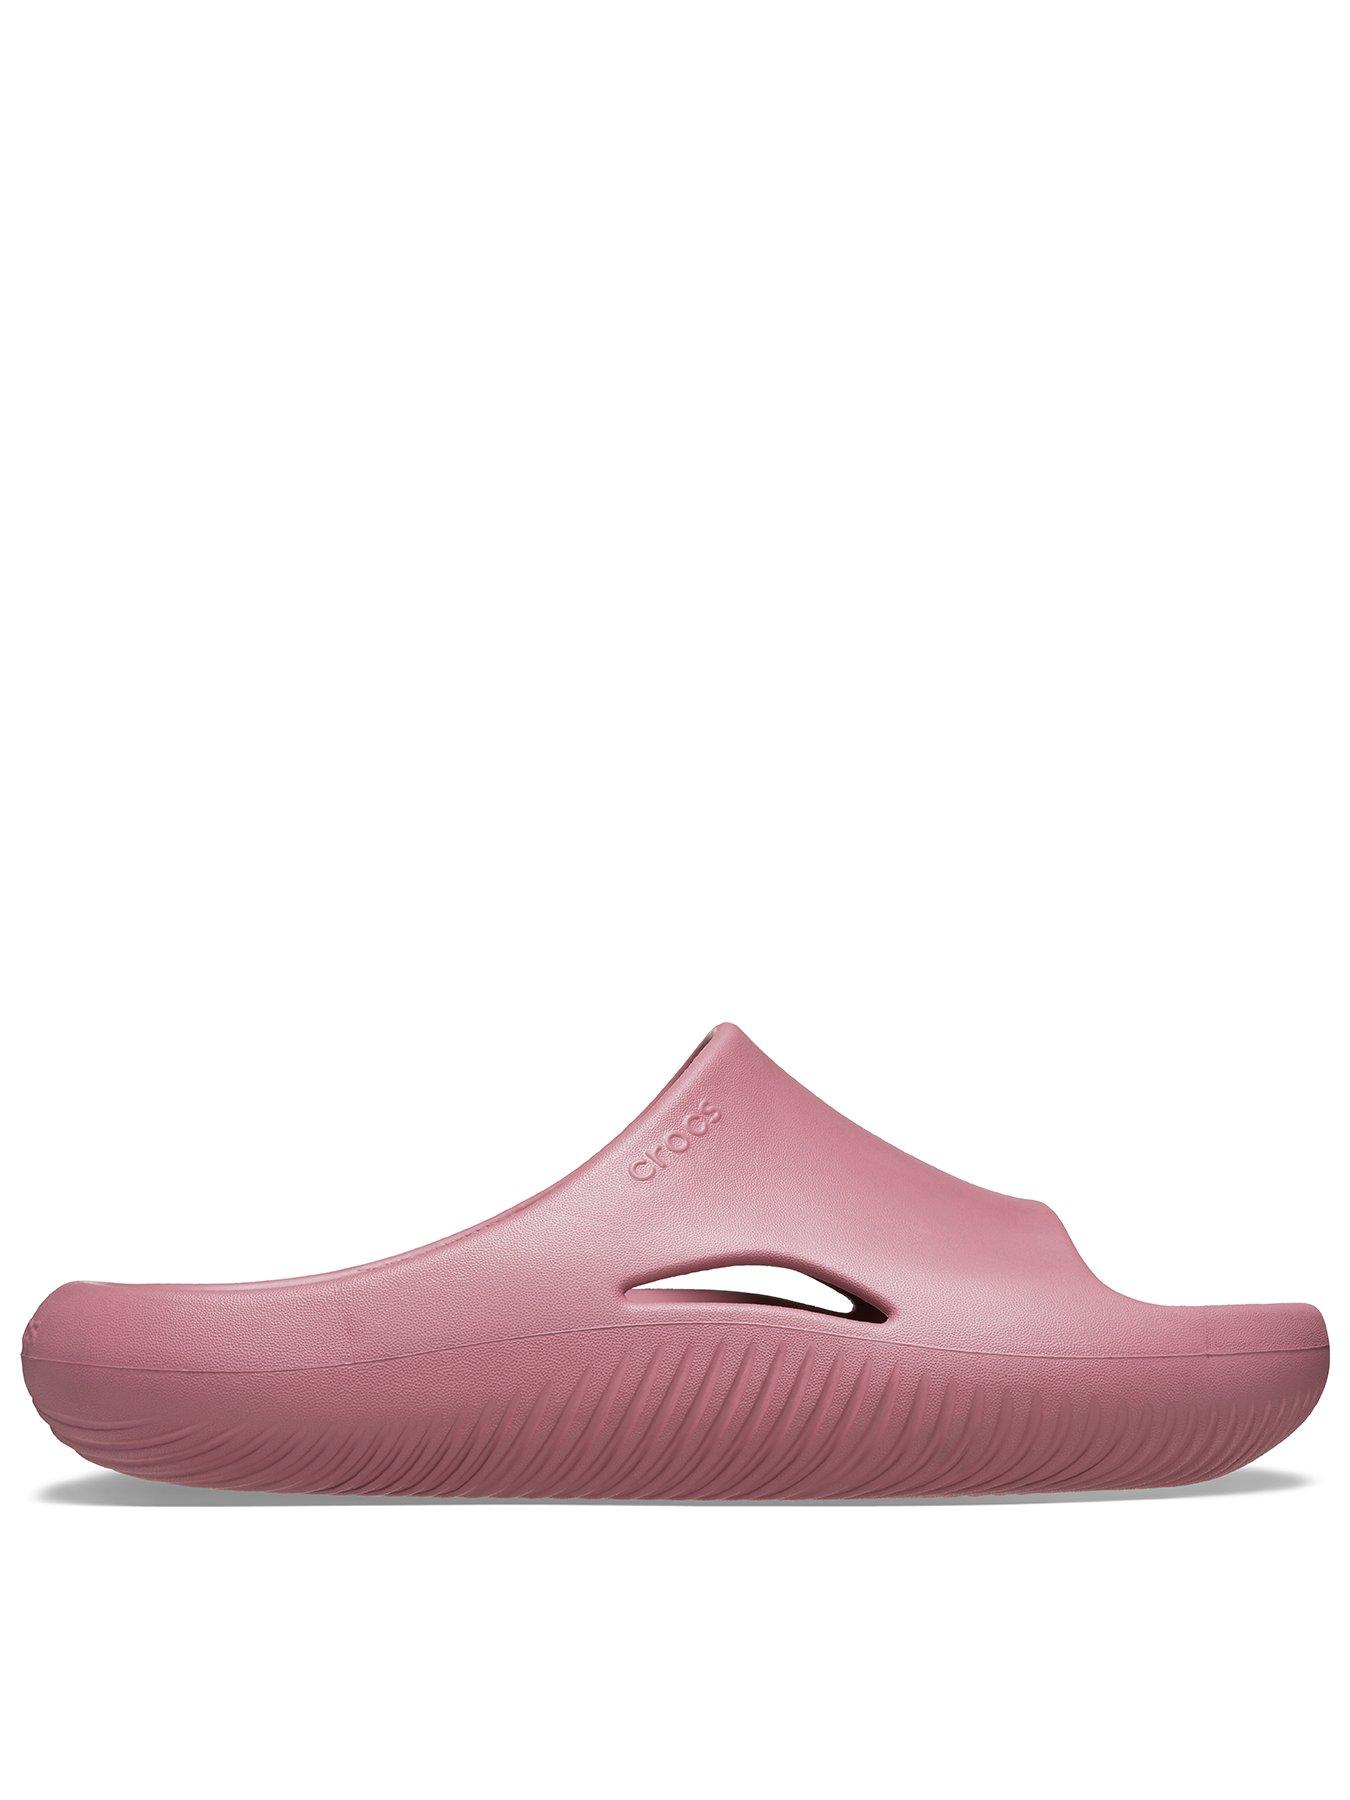 Crocs Mellow Recovery Slide Sandal- Cassis Pink